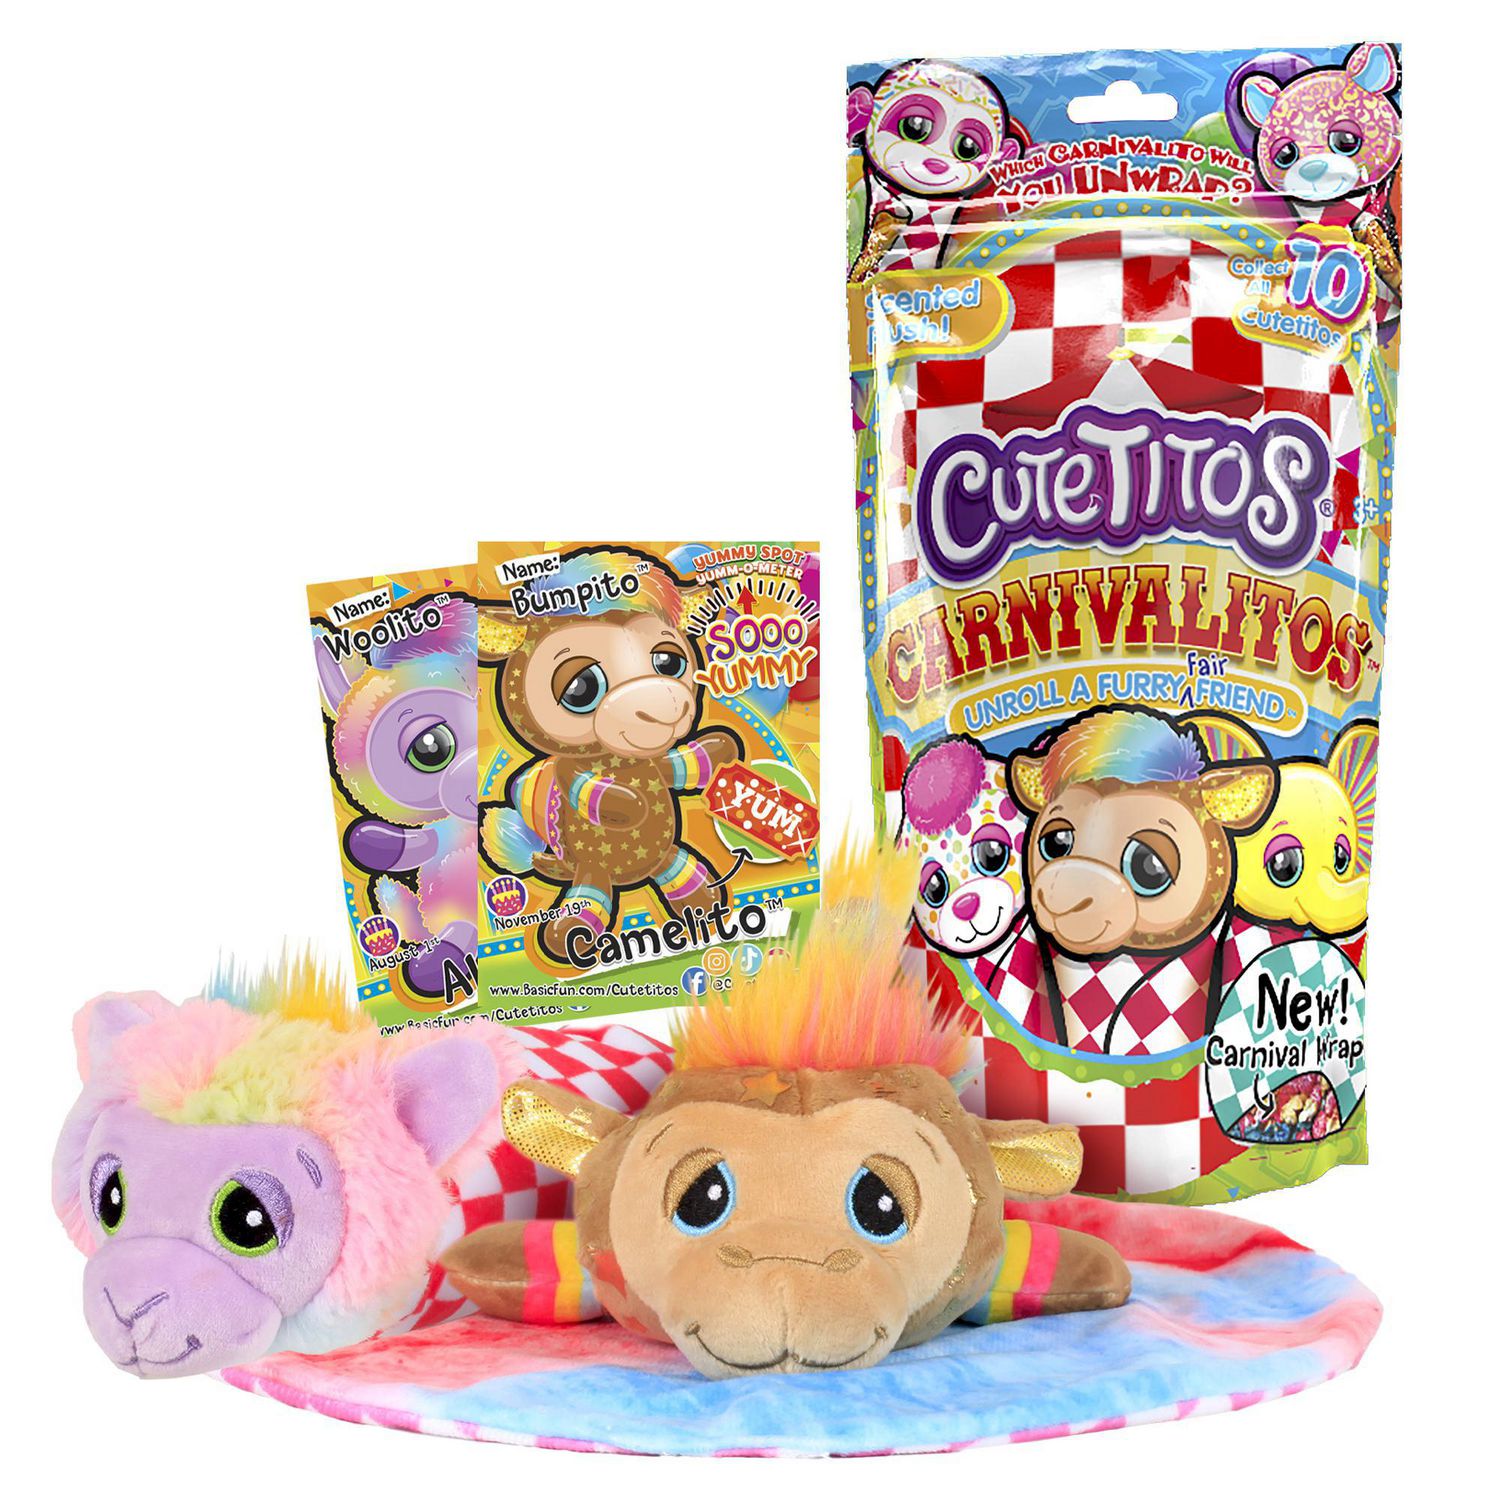 NEW CARNIVAL THEME - SCENTED Cutetitos Carnivalitos - Surprise Stuffed  Animals - Collectible Carnival Plush - Series 1 | Walmart Canada